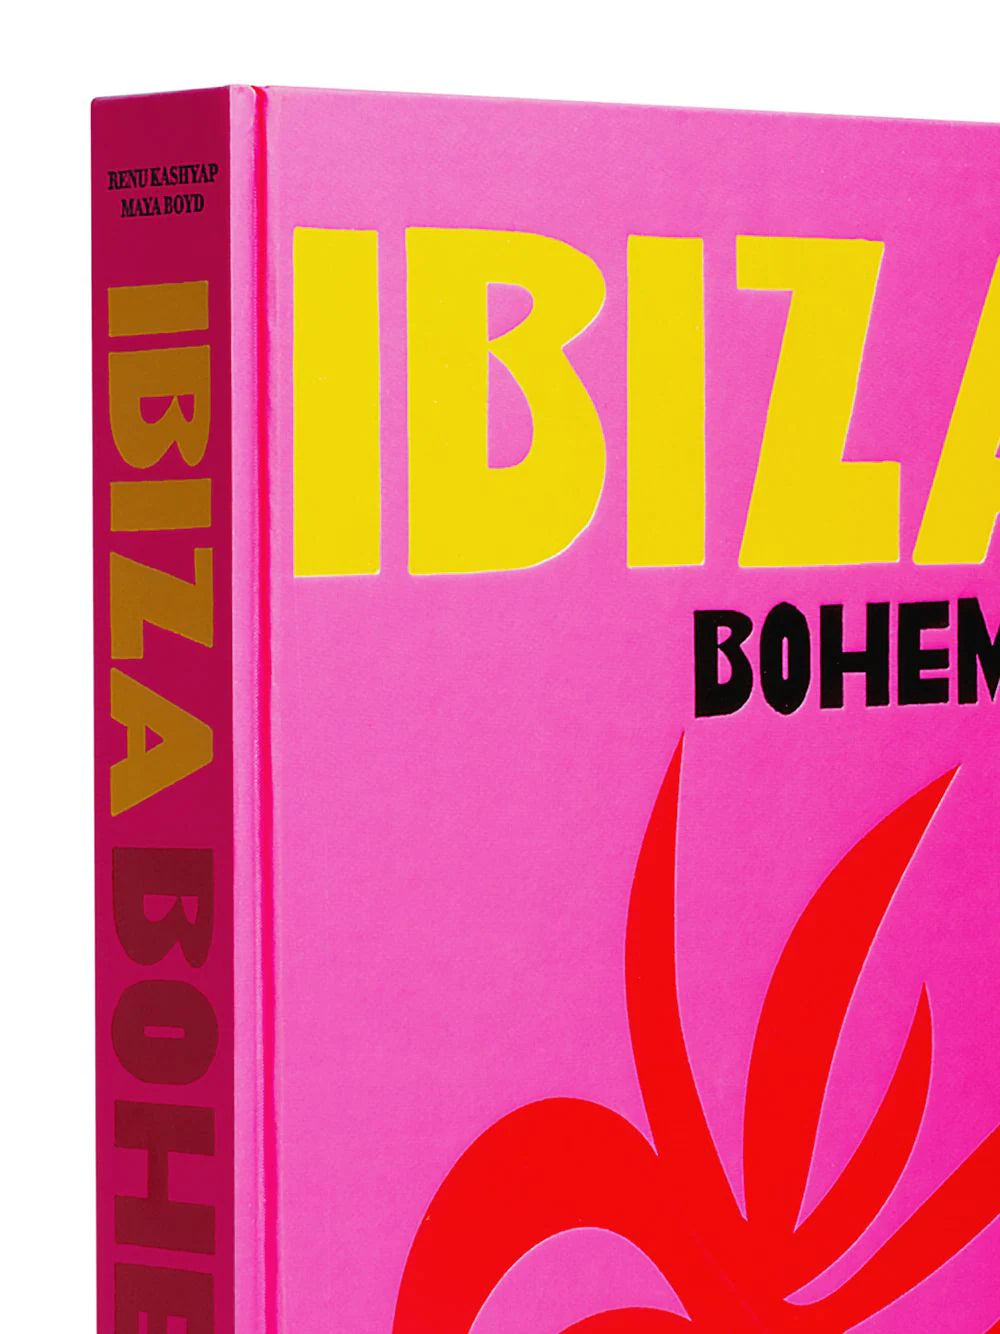 IBIZA BOHEMIA BOOK - $105